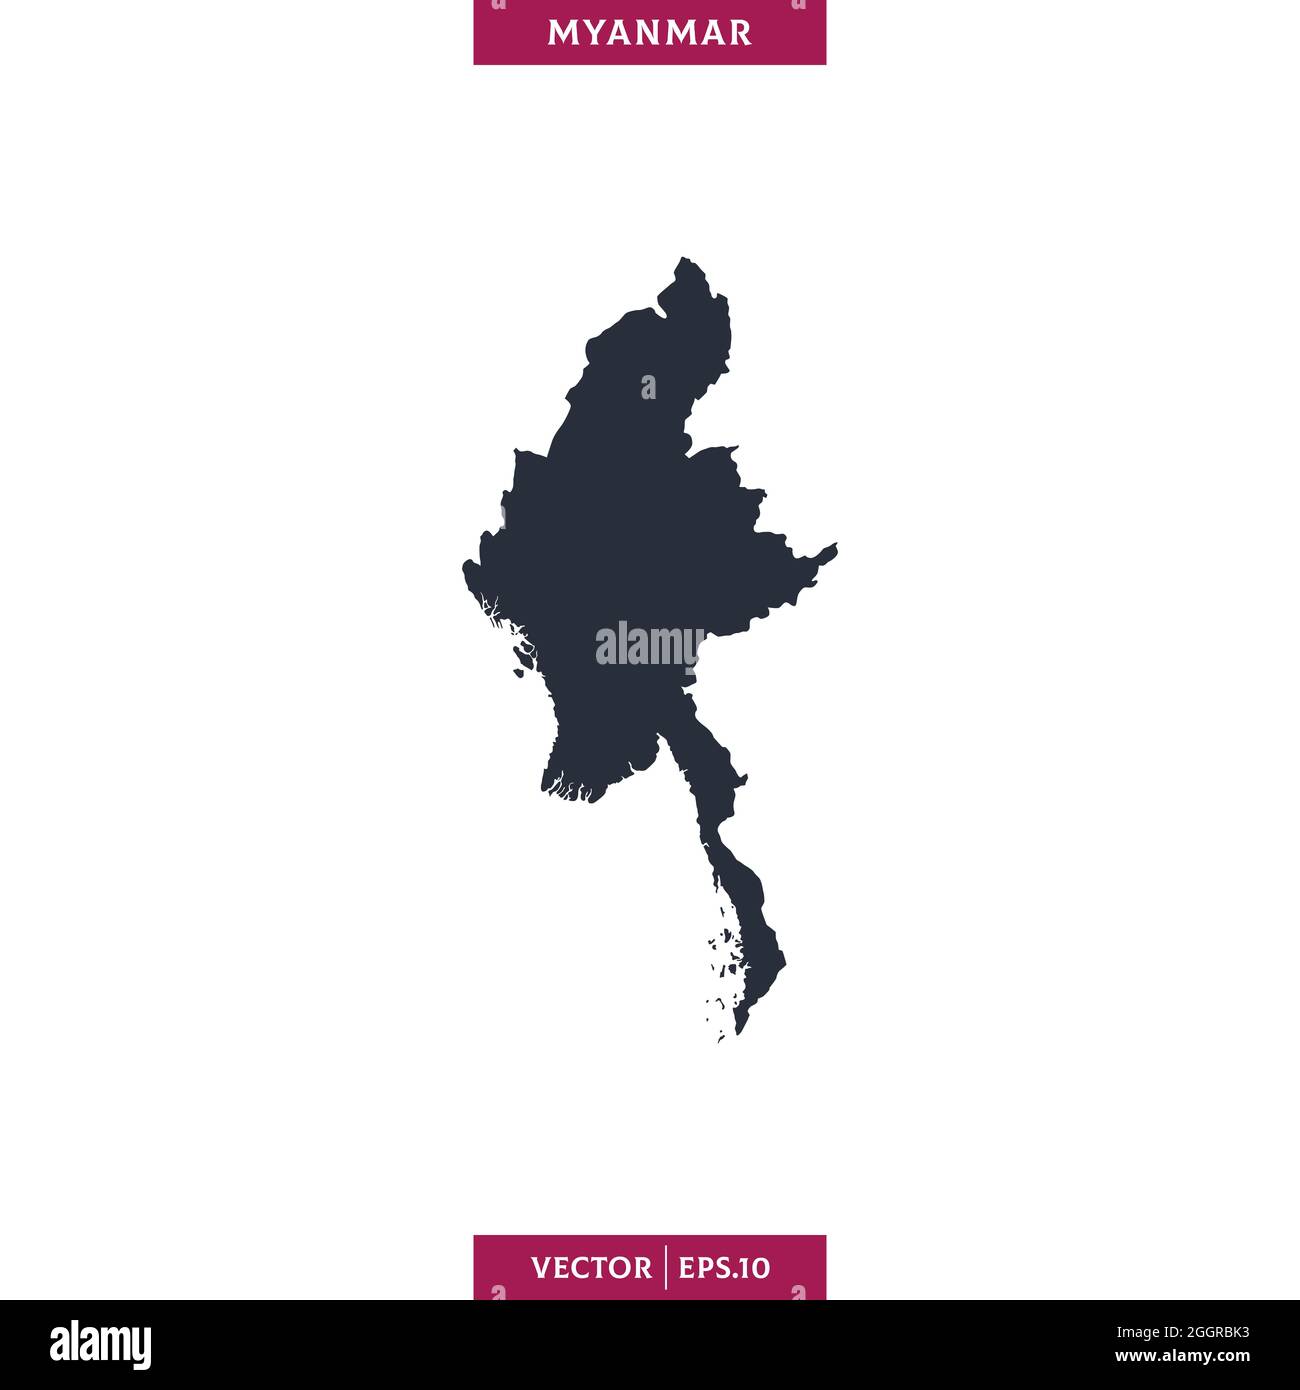 Detailed map of Myanmar vector stock illustration design template. Vector eps 10. Stock Vector